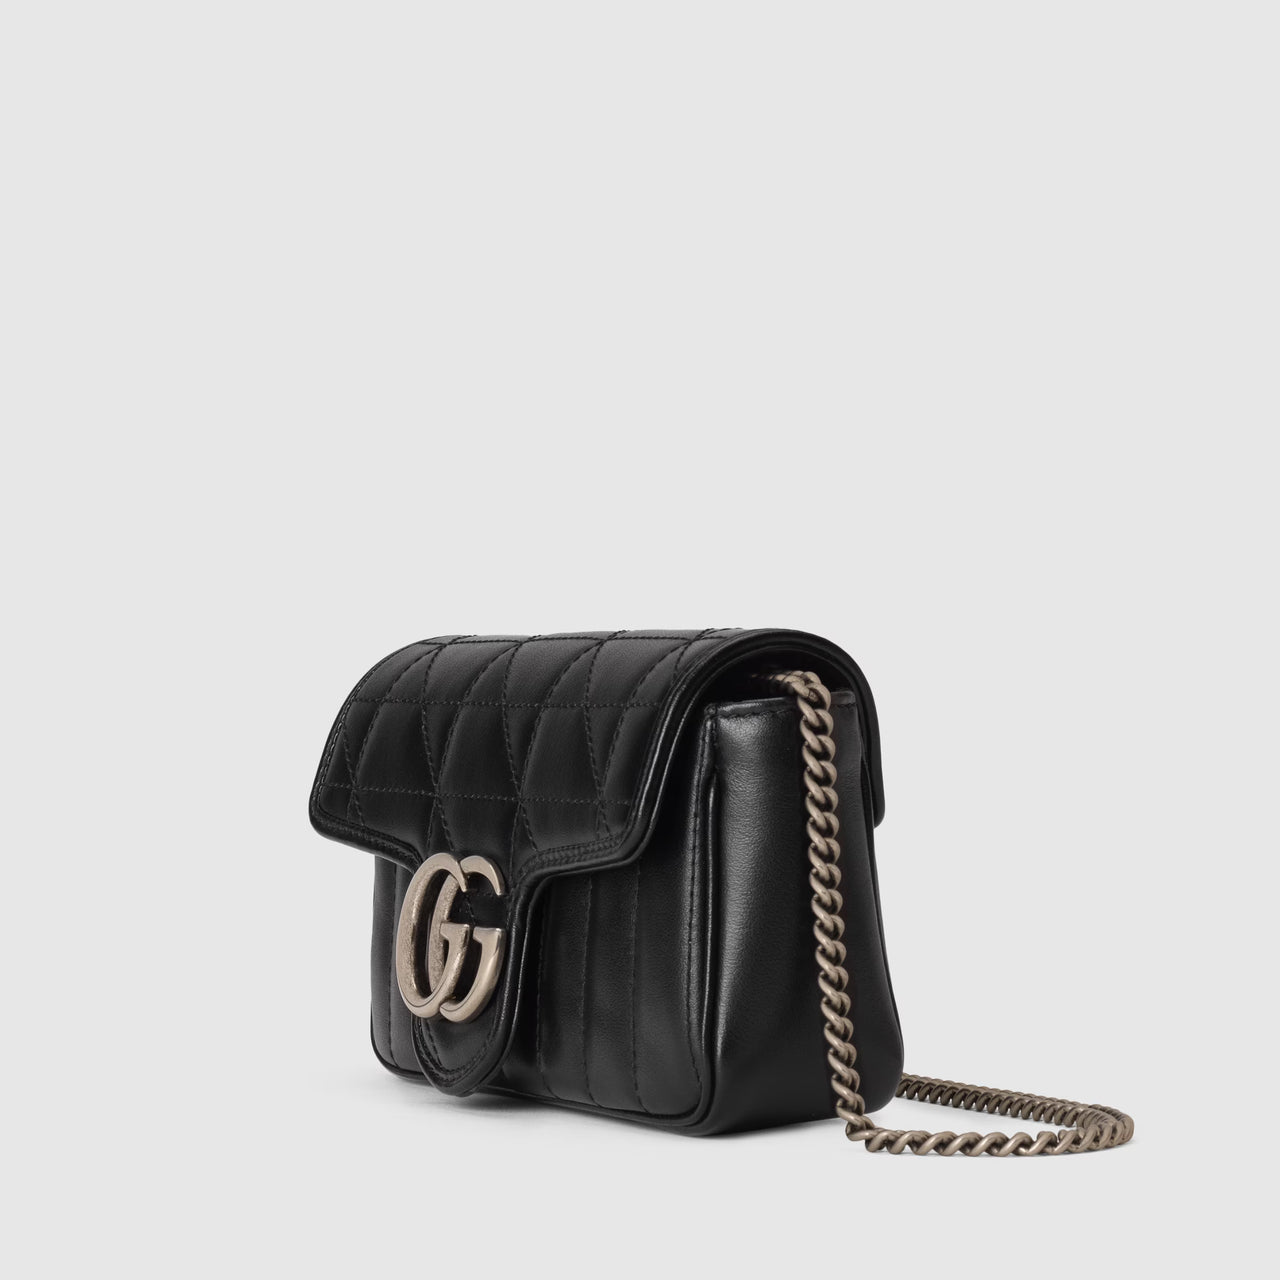 Gucci GG Marmont Super Mini Bag  (Black matelassé leather)